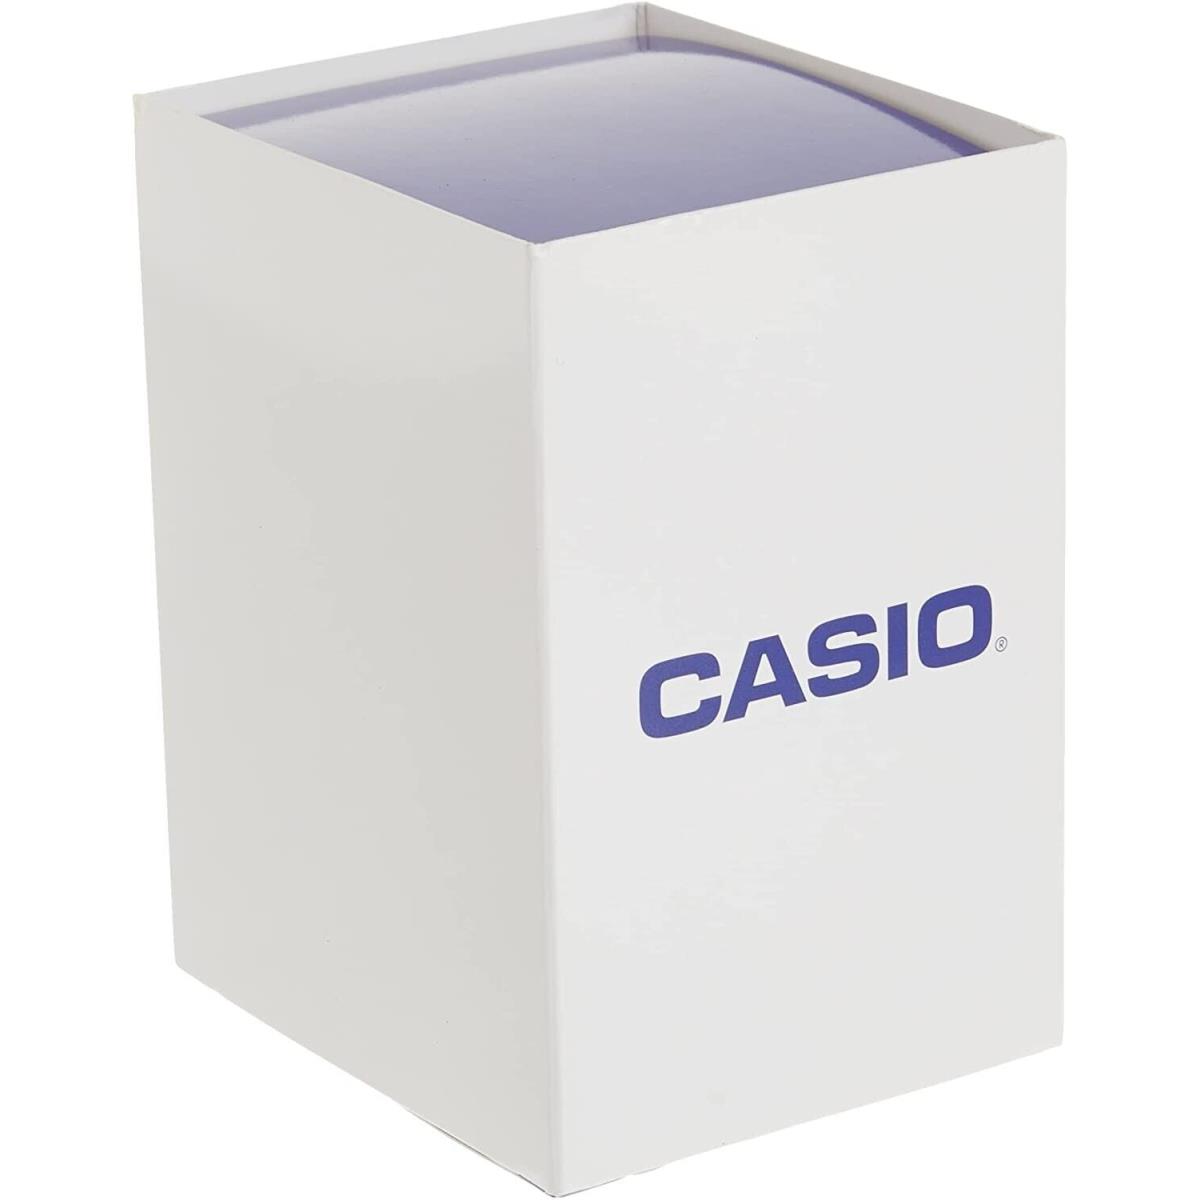 Casio AQS810WC-7AV Solar Illuminator Watch White Resin 100 Meter 5 Alarms - Dial: Black, Band: White